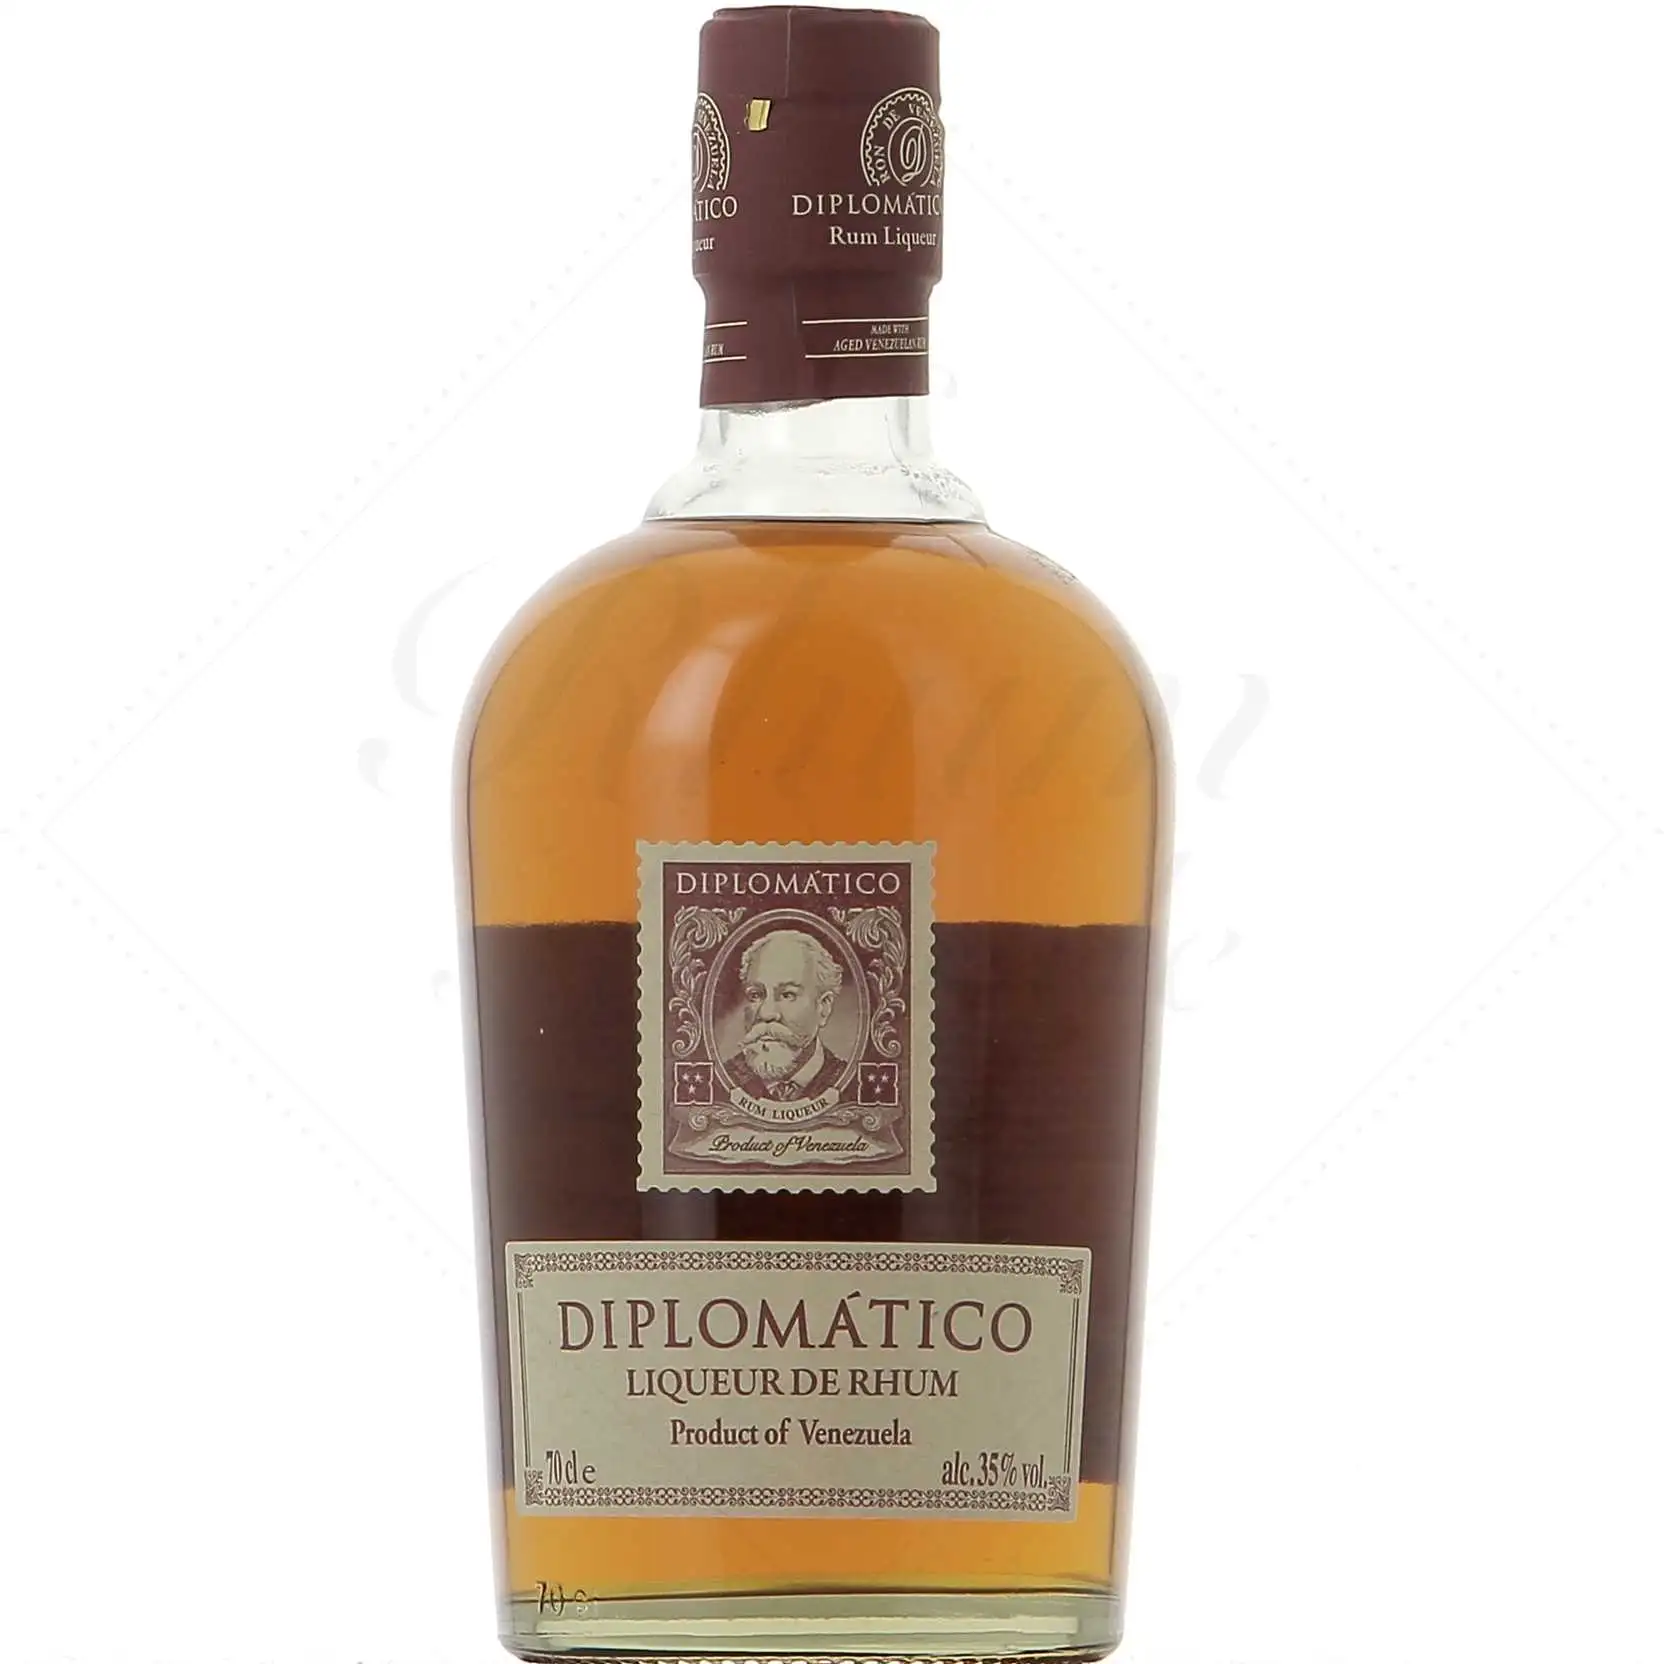 Image of the front of the bottle of the rum Diplomático / Botucal Liqueur de Rhum